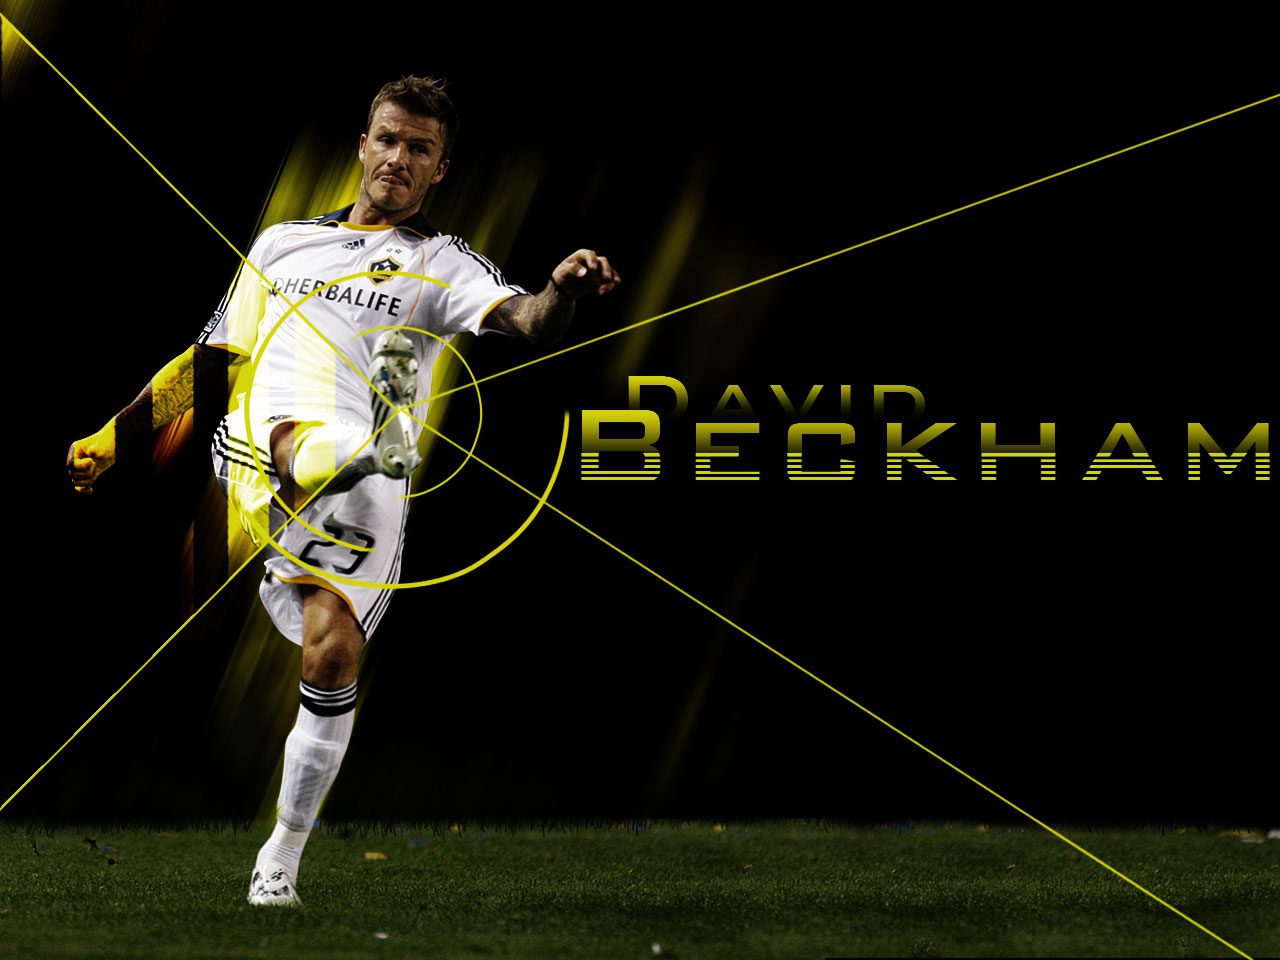 Wallpaper Graphic and Vector David Beckham   Los Angeles Galaxy